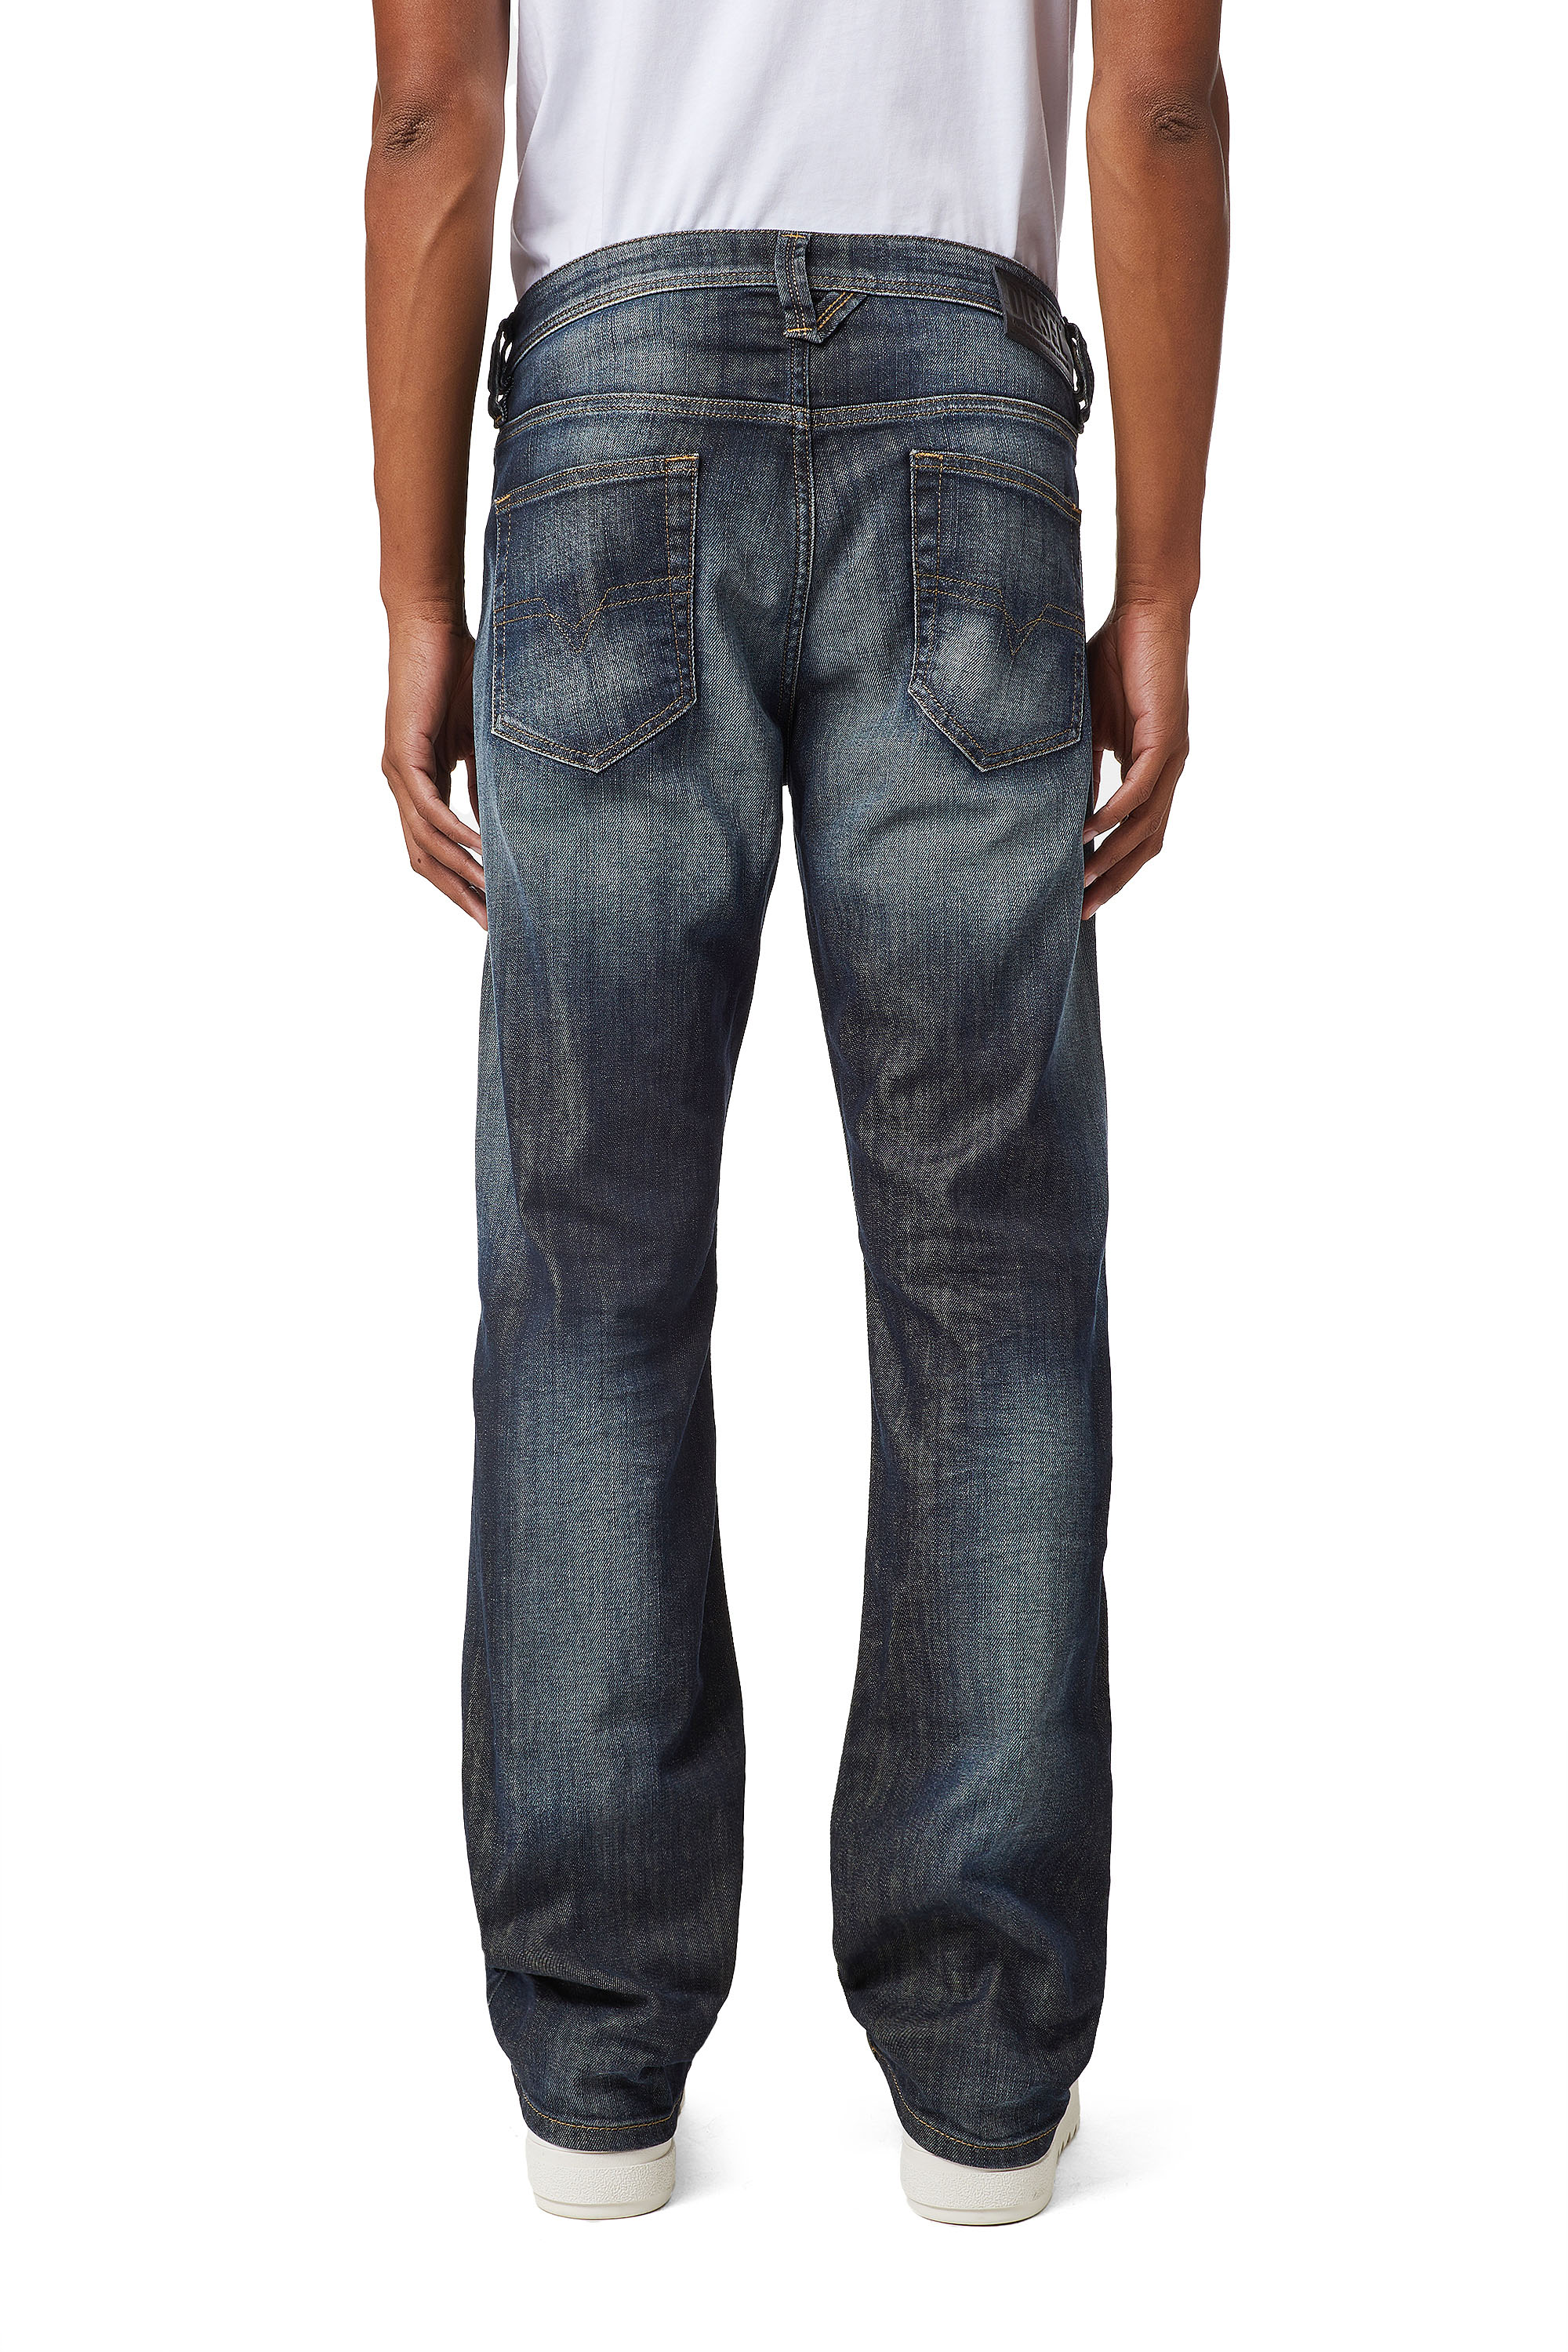 Diesel - Larkee 009EP Straight Jeans,  - Image 2